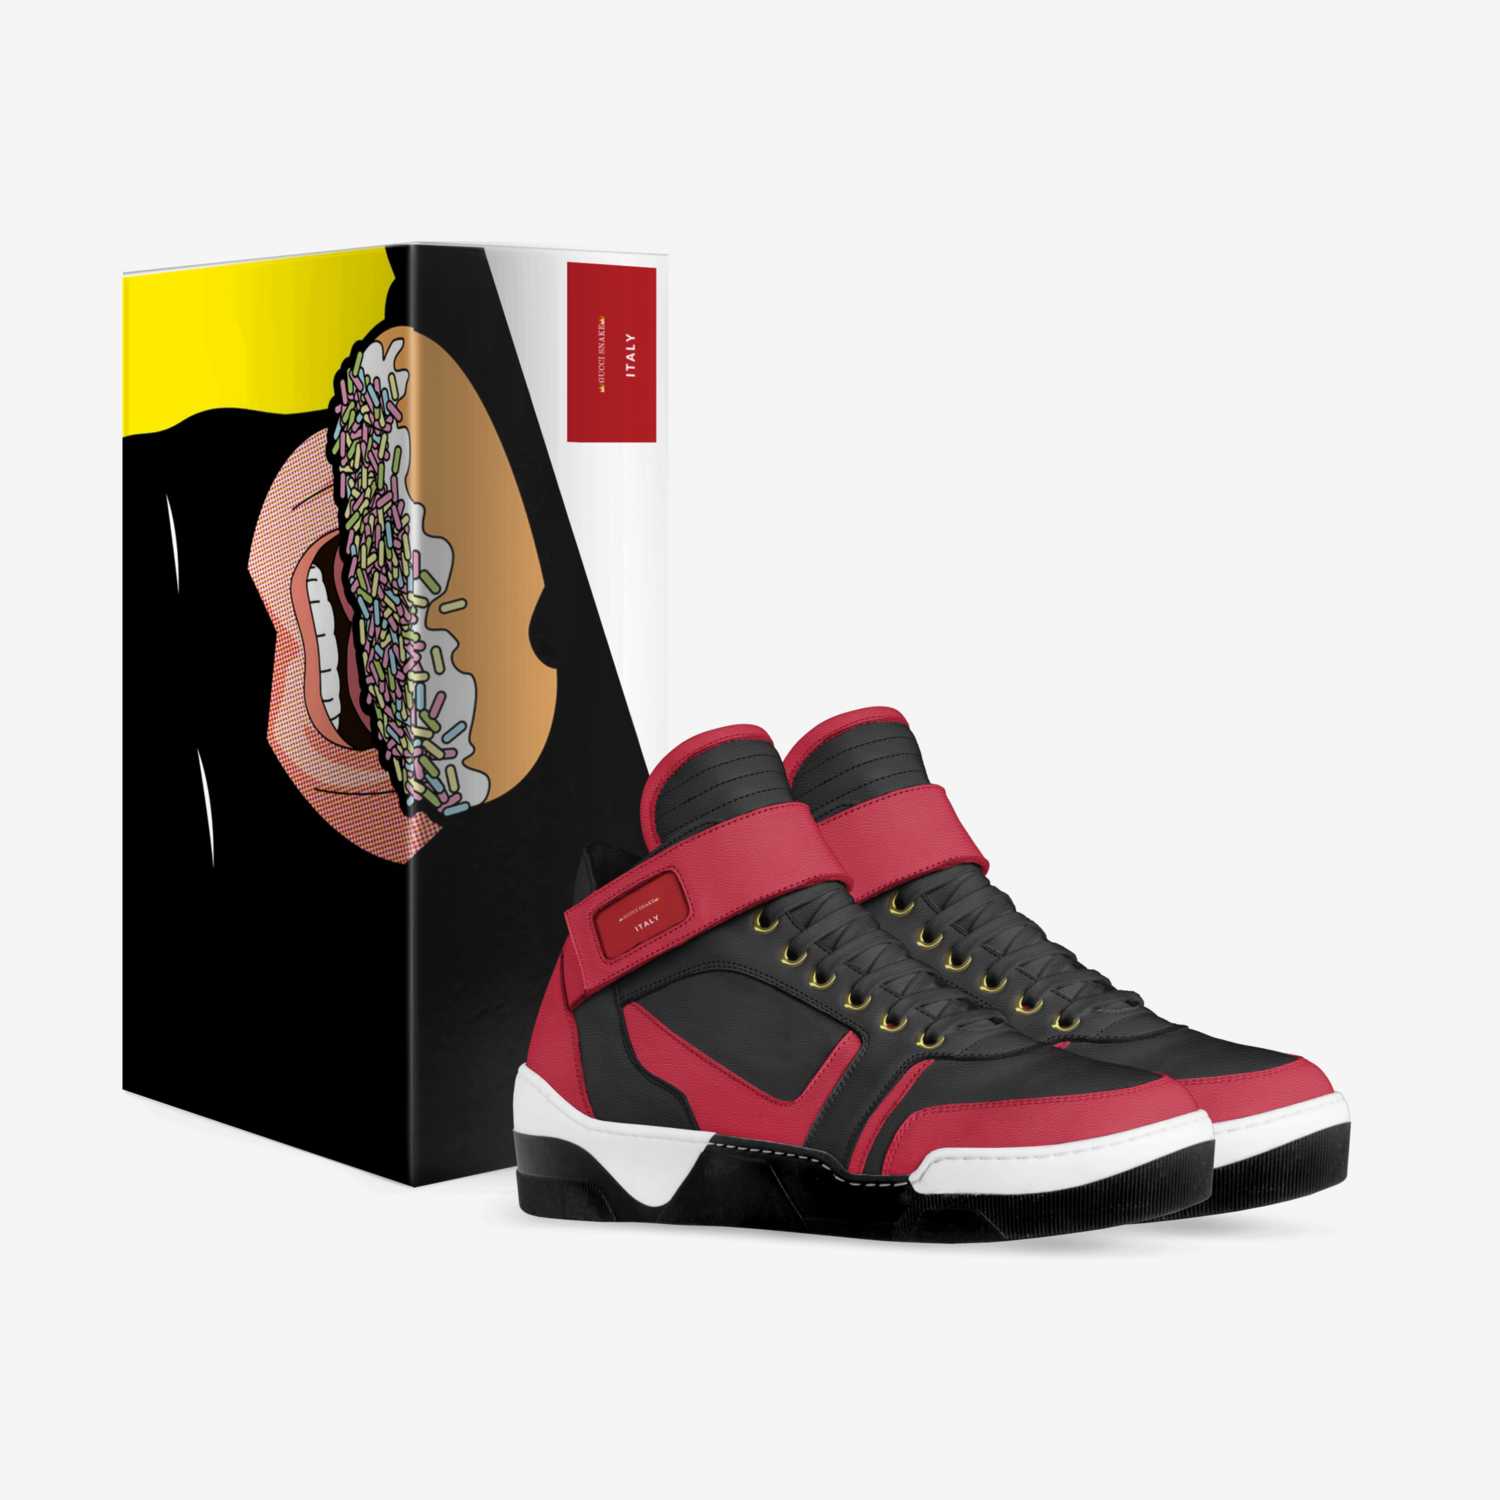 Ğūččī snake custom made in Italy shoes by Kasper Kallio | Box view